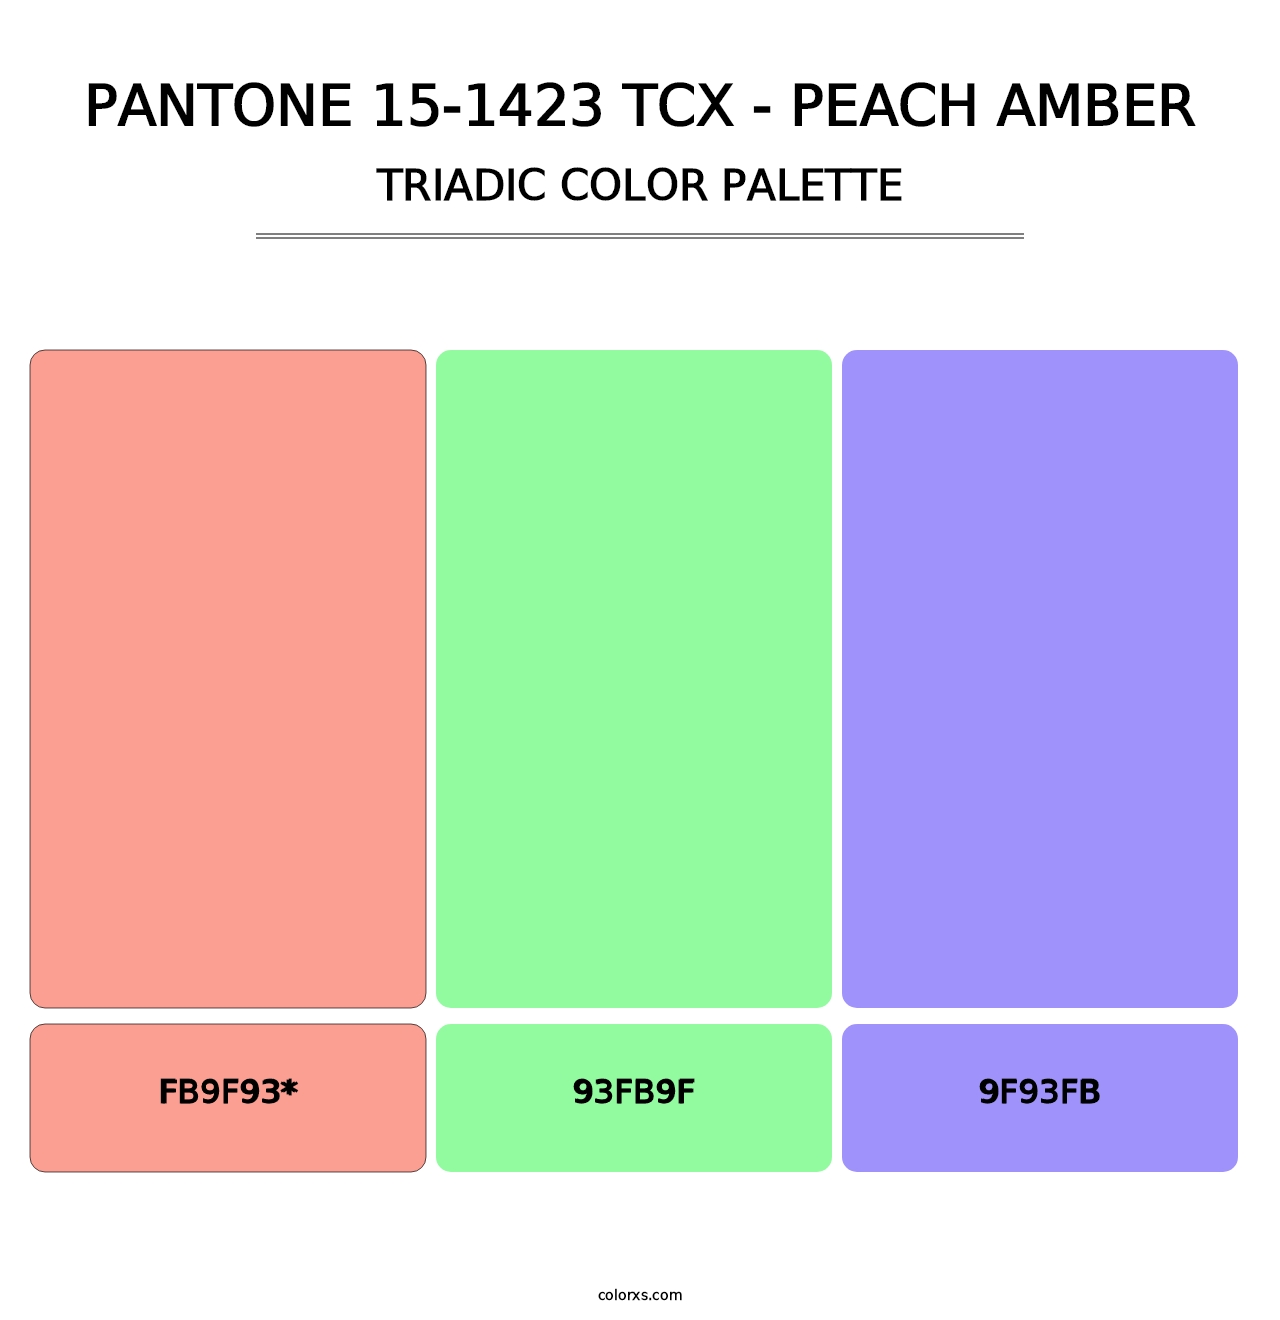 PANTONE 15-1423 TCX - Peach Amber - Triadic Color Palette